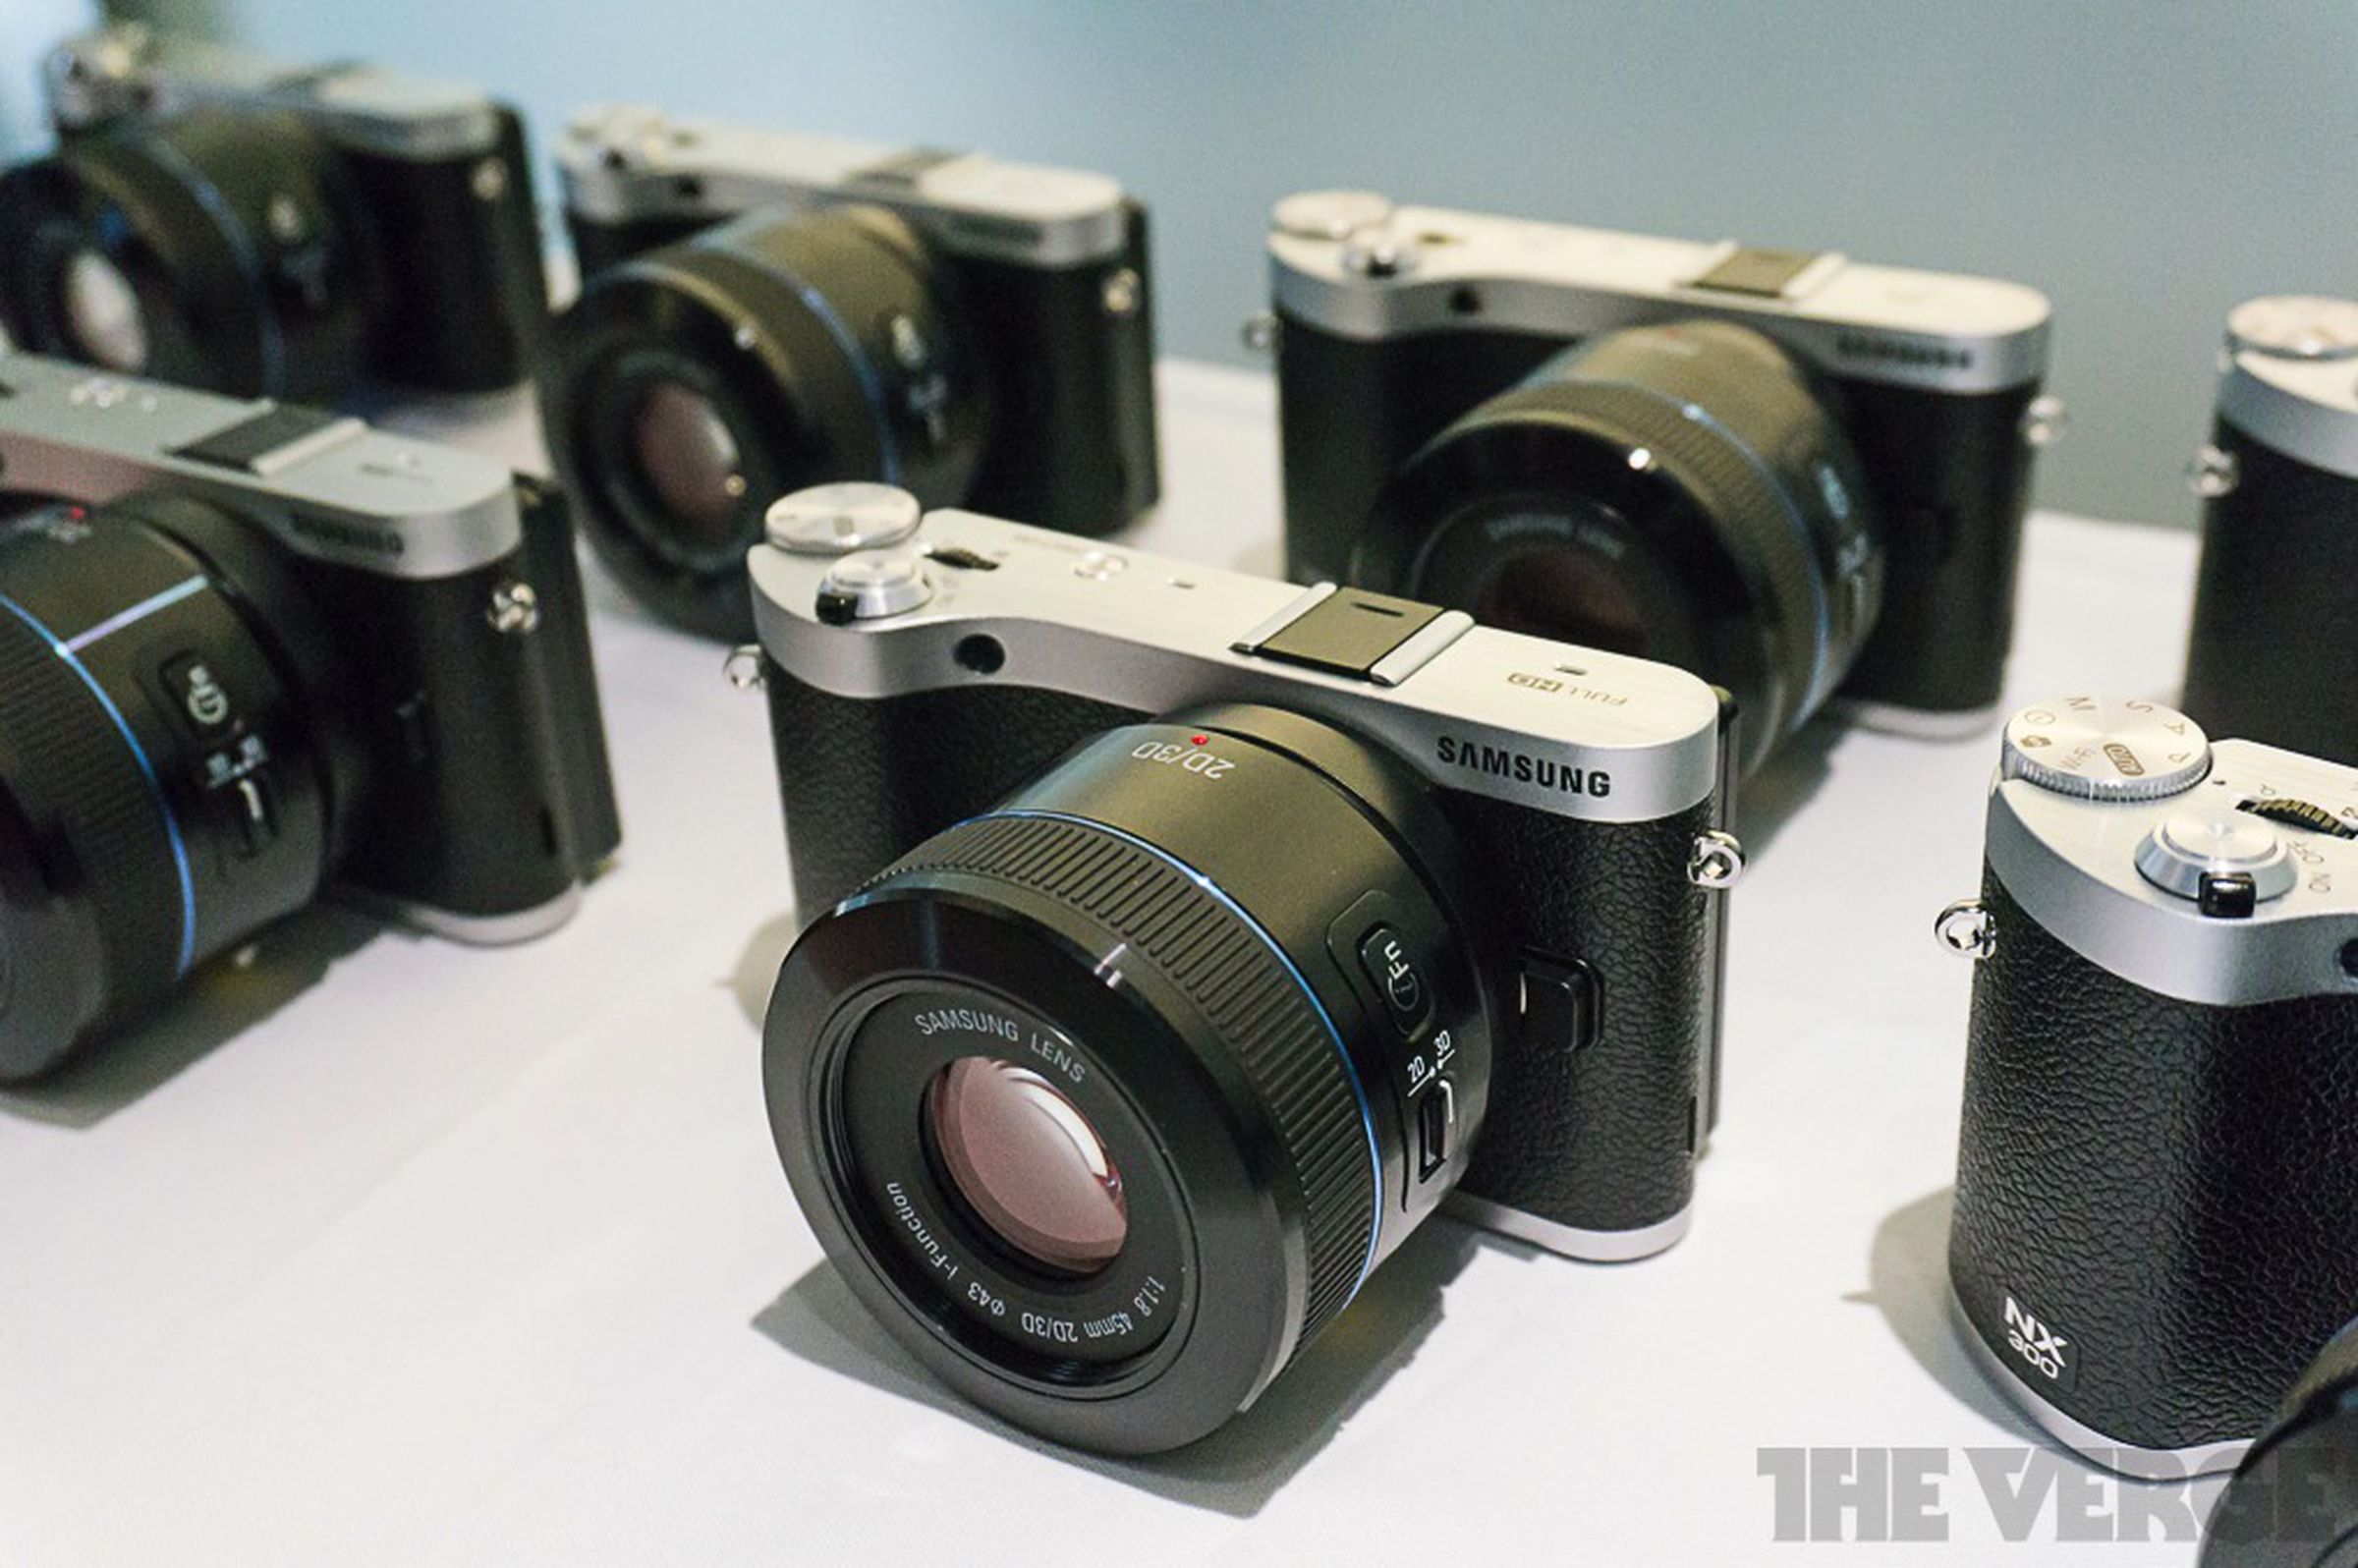 Samsung NX300 mirrorless camera hands-on photos